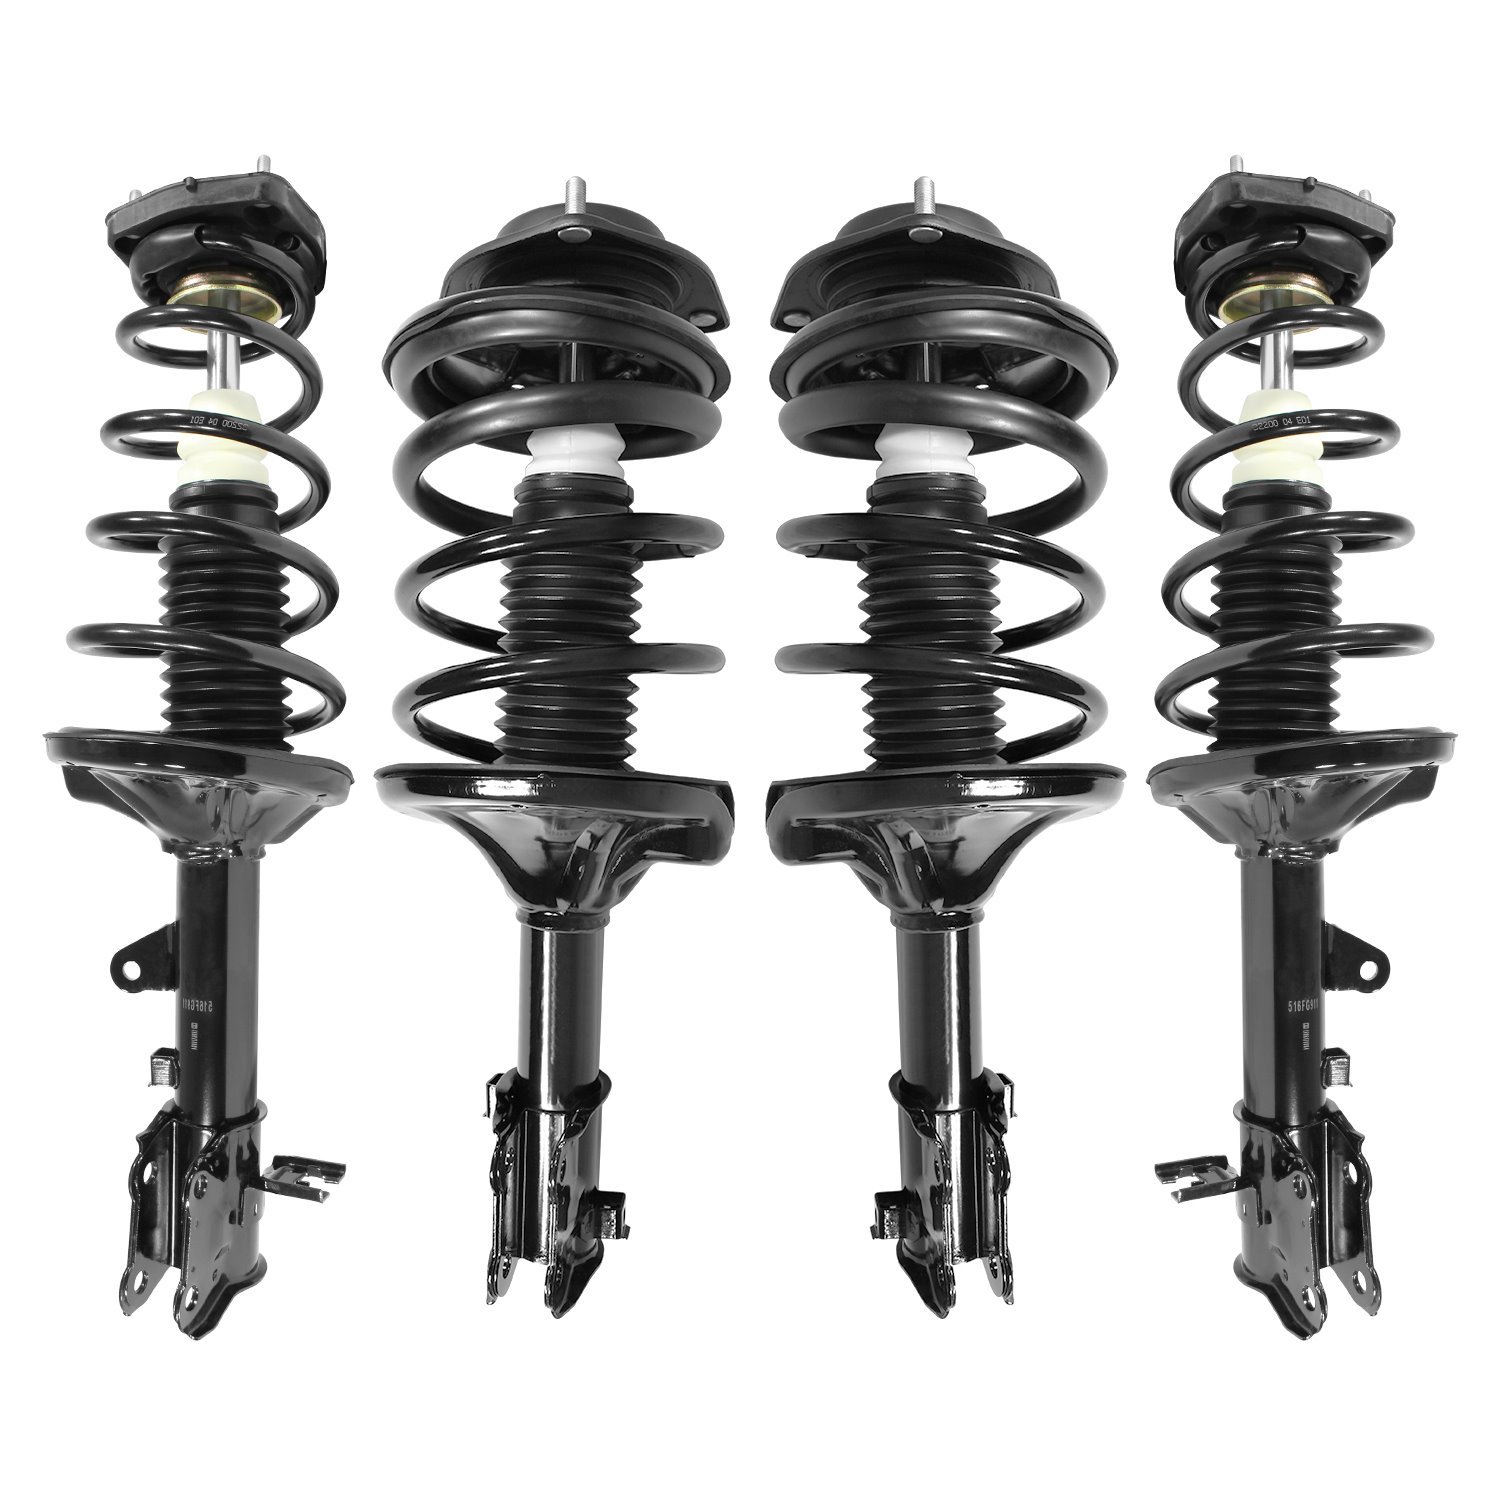 4-11131-15911-001 Front & Rear Suspension Strut & Coil Spring Assembly Kit Fits Select Hyundai Elantra